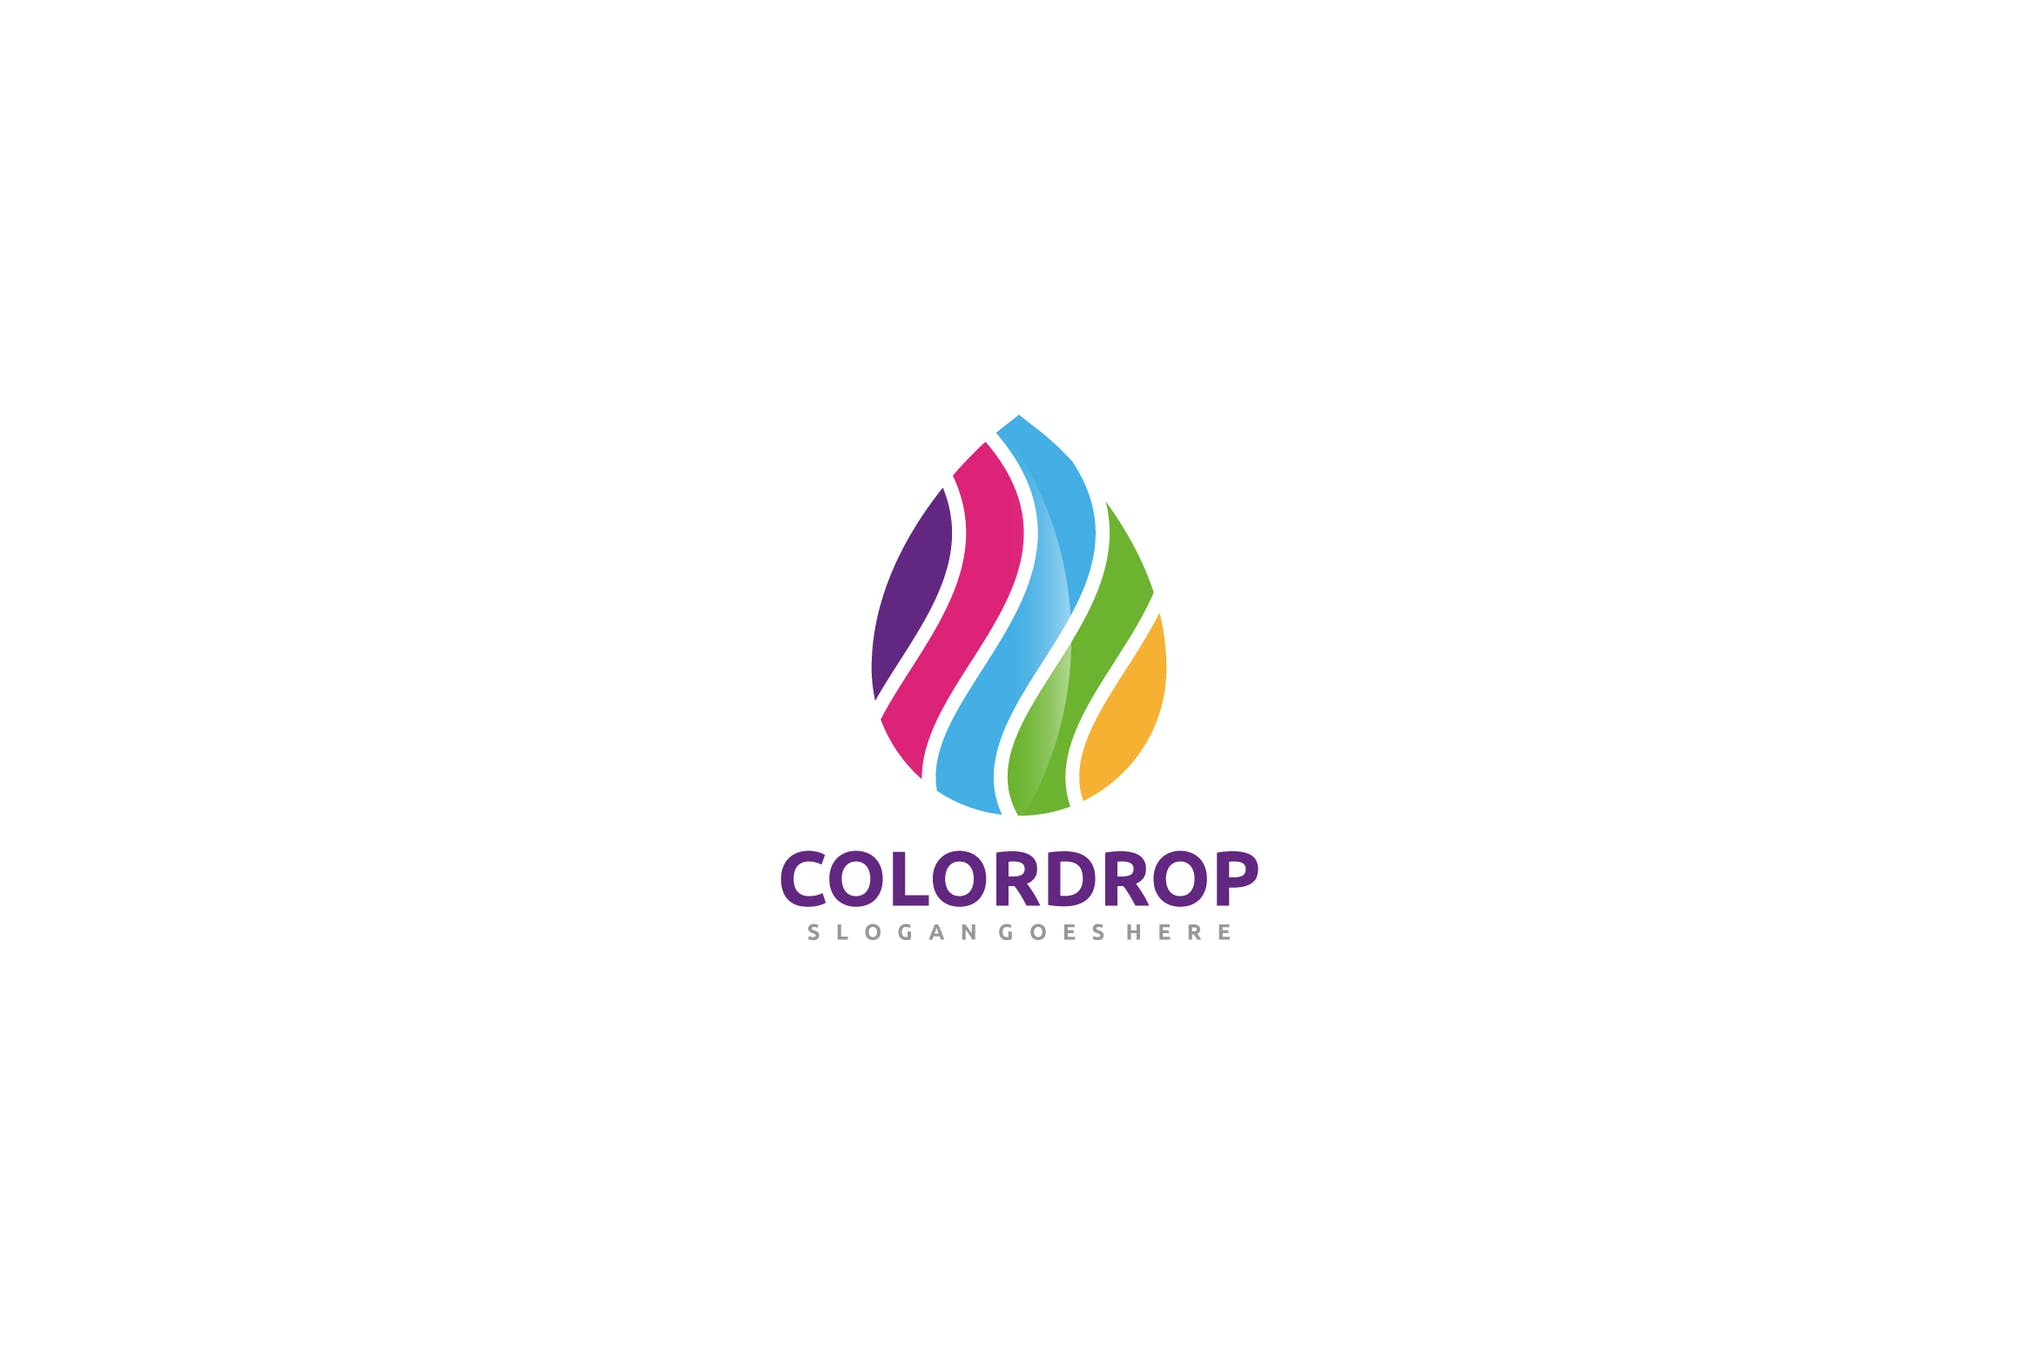 A drop logo template